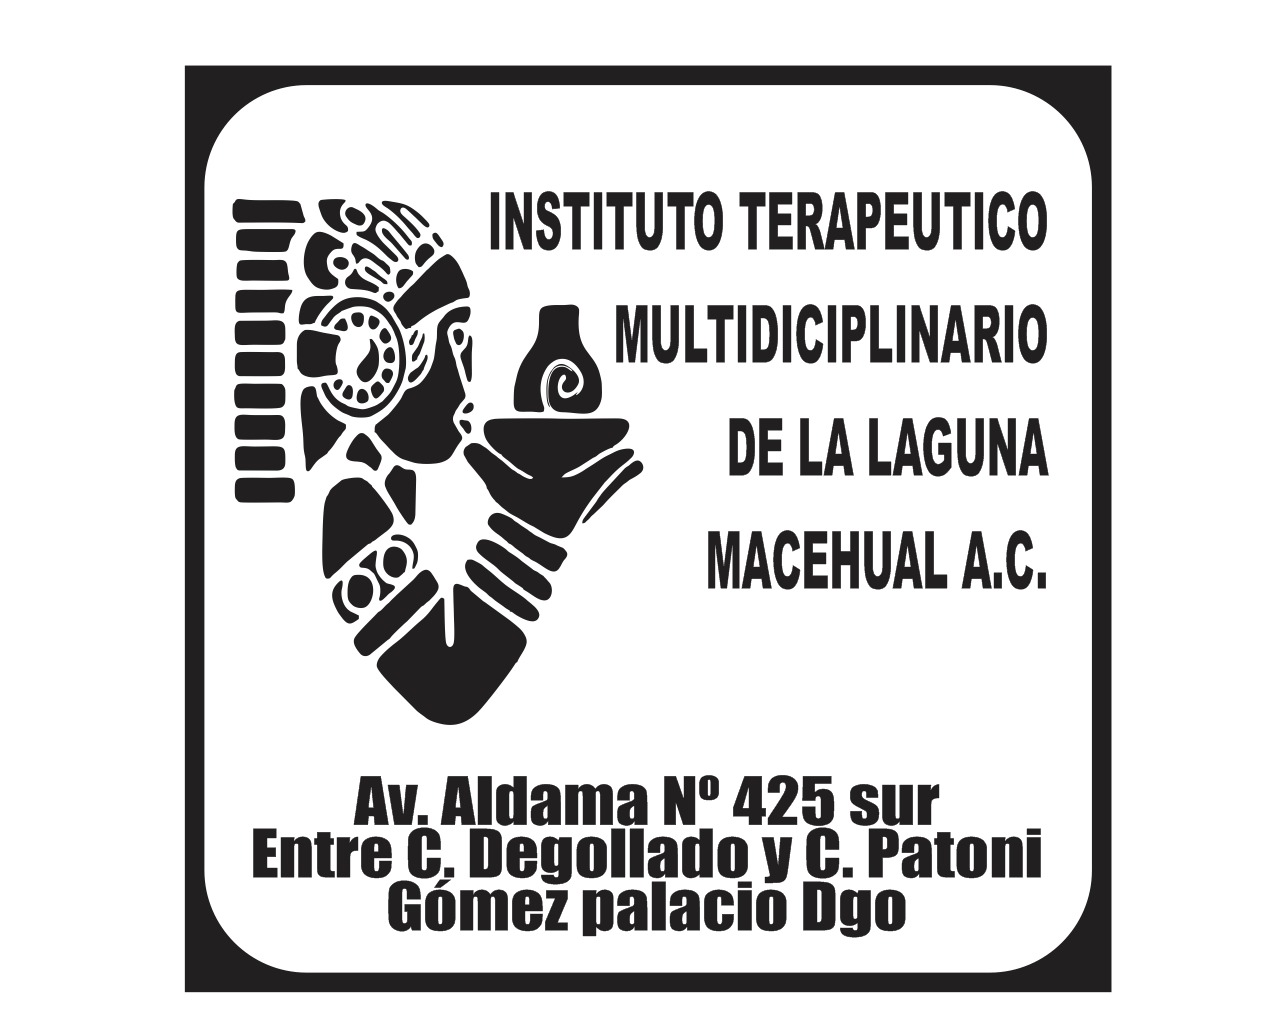 Instituto Terapéutico Multidisciplinario de la Laguna “MACEHUAL” A.C.